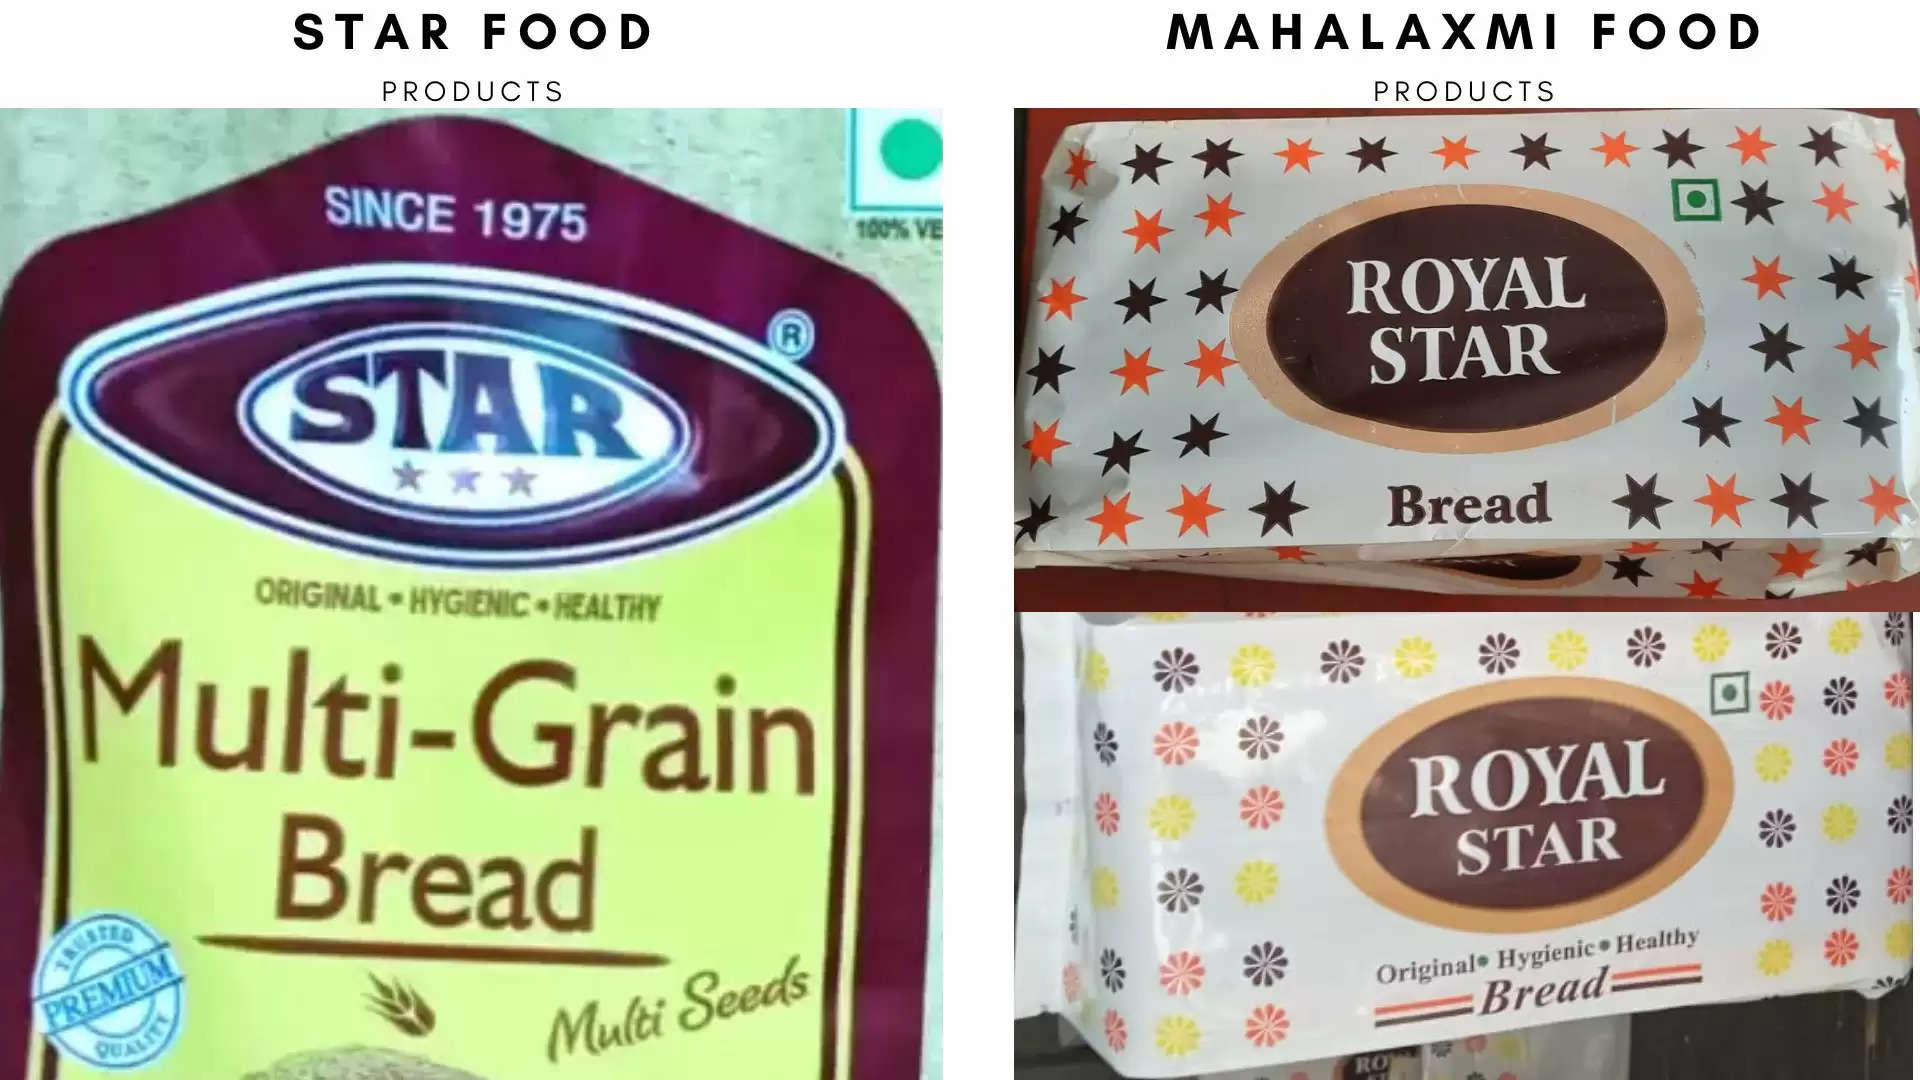 Star Bread forgery case Mahalaxmi Food Products